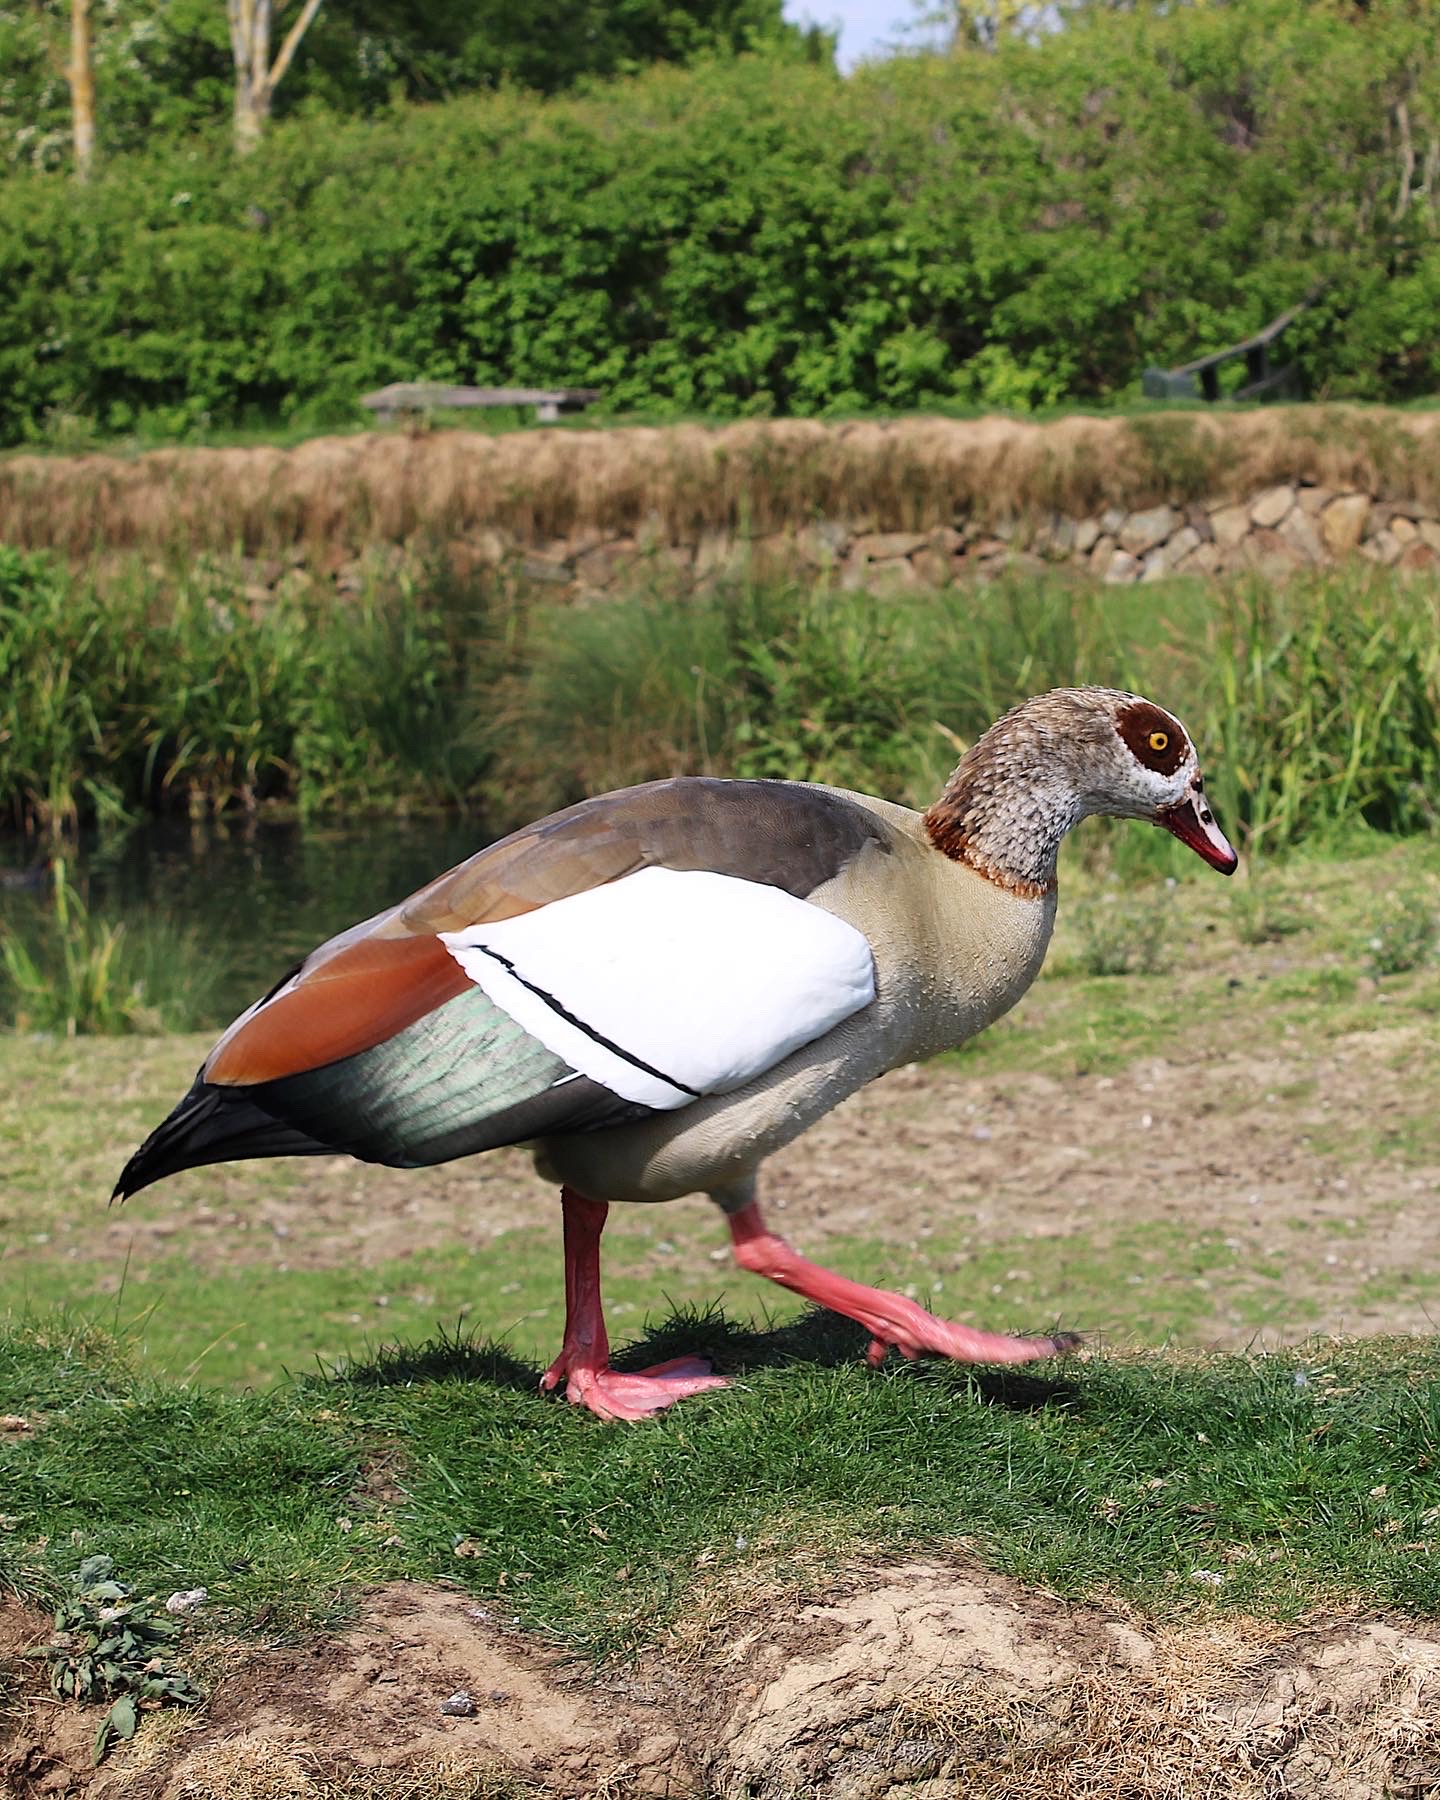 An Egyptian goose walking along